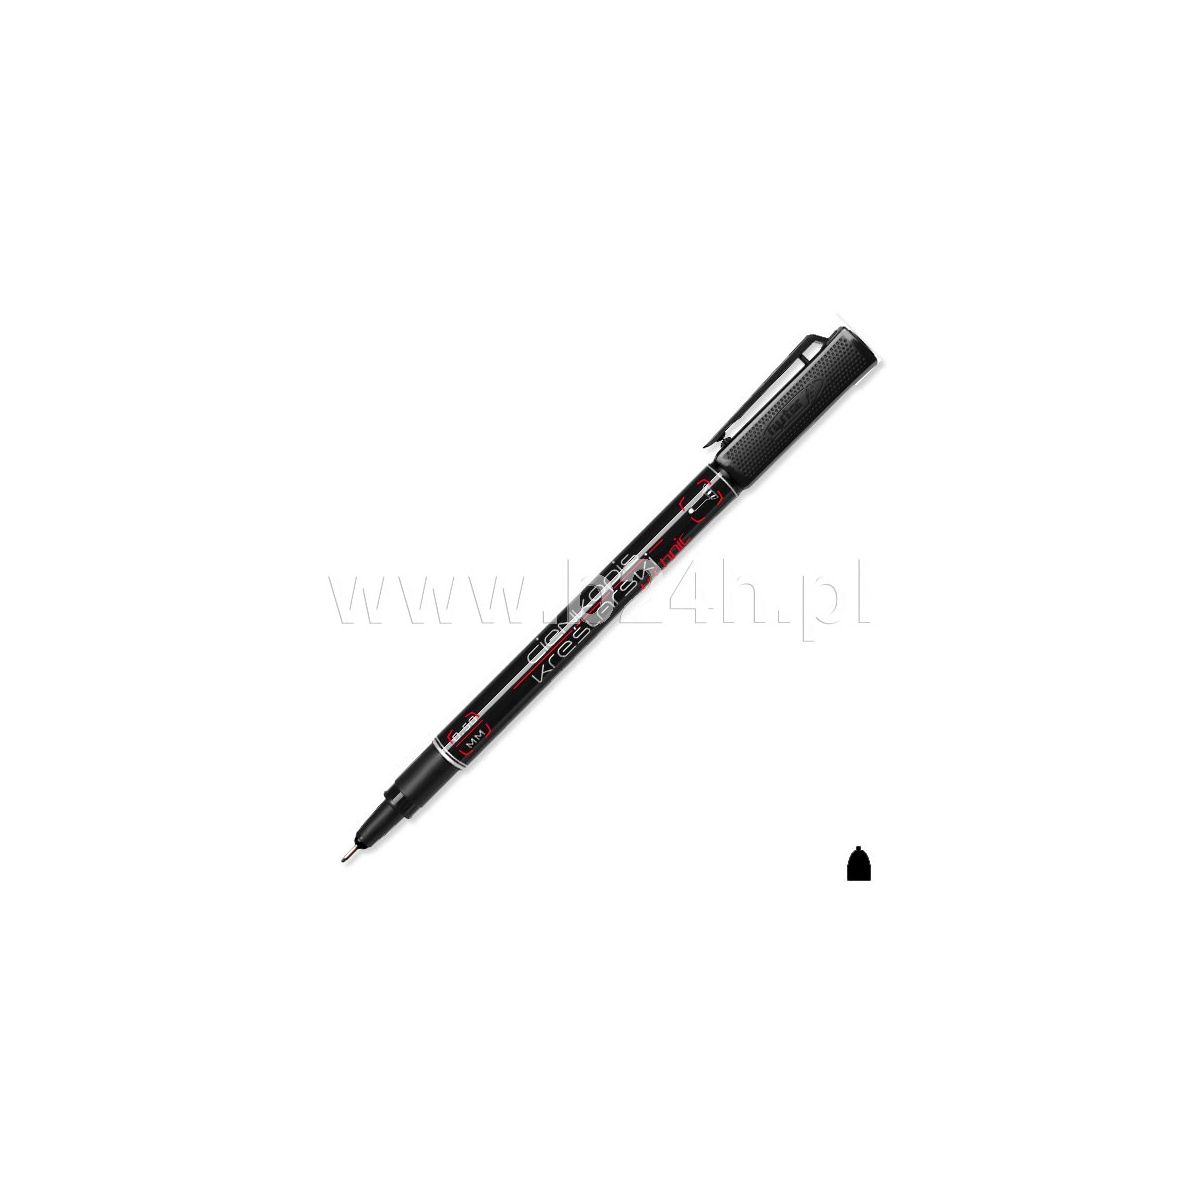 Cienkopis kreślarski Rystor, czarny 0,6mm 1kol. (403-060)